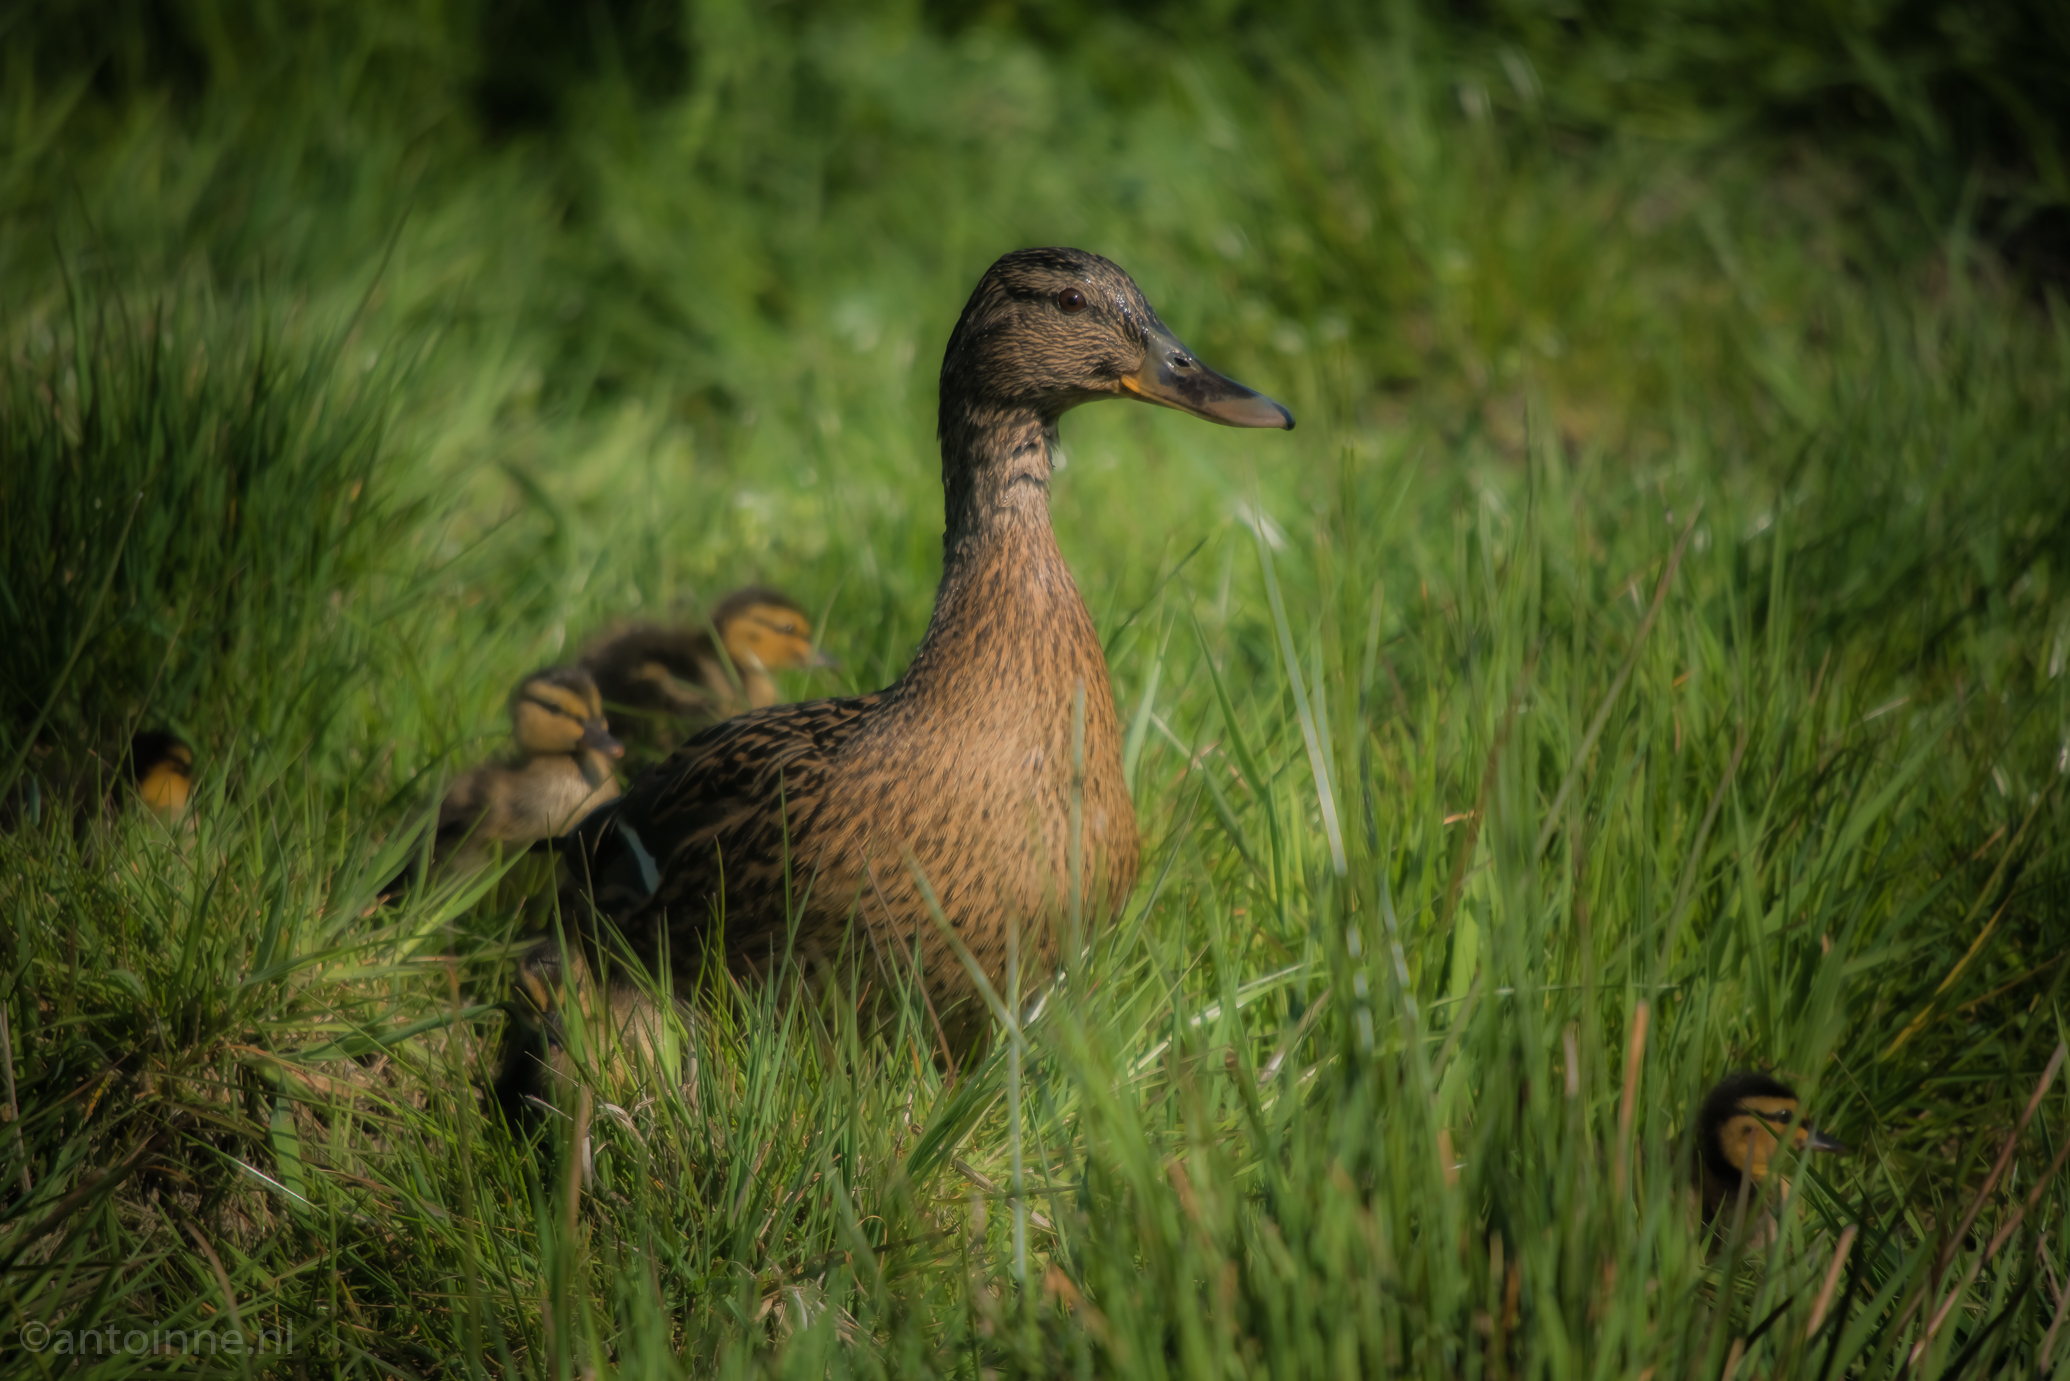 Mother duck and ducklings (Eemnes, 2019)